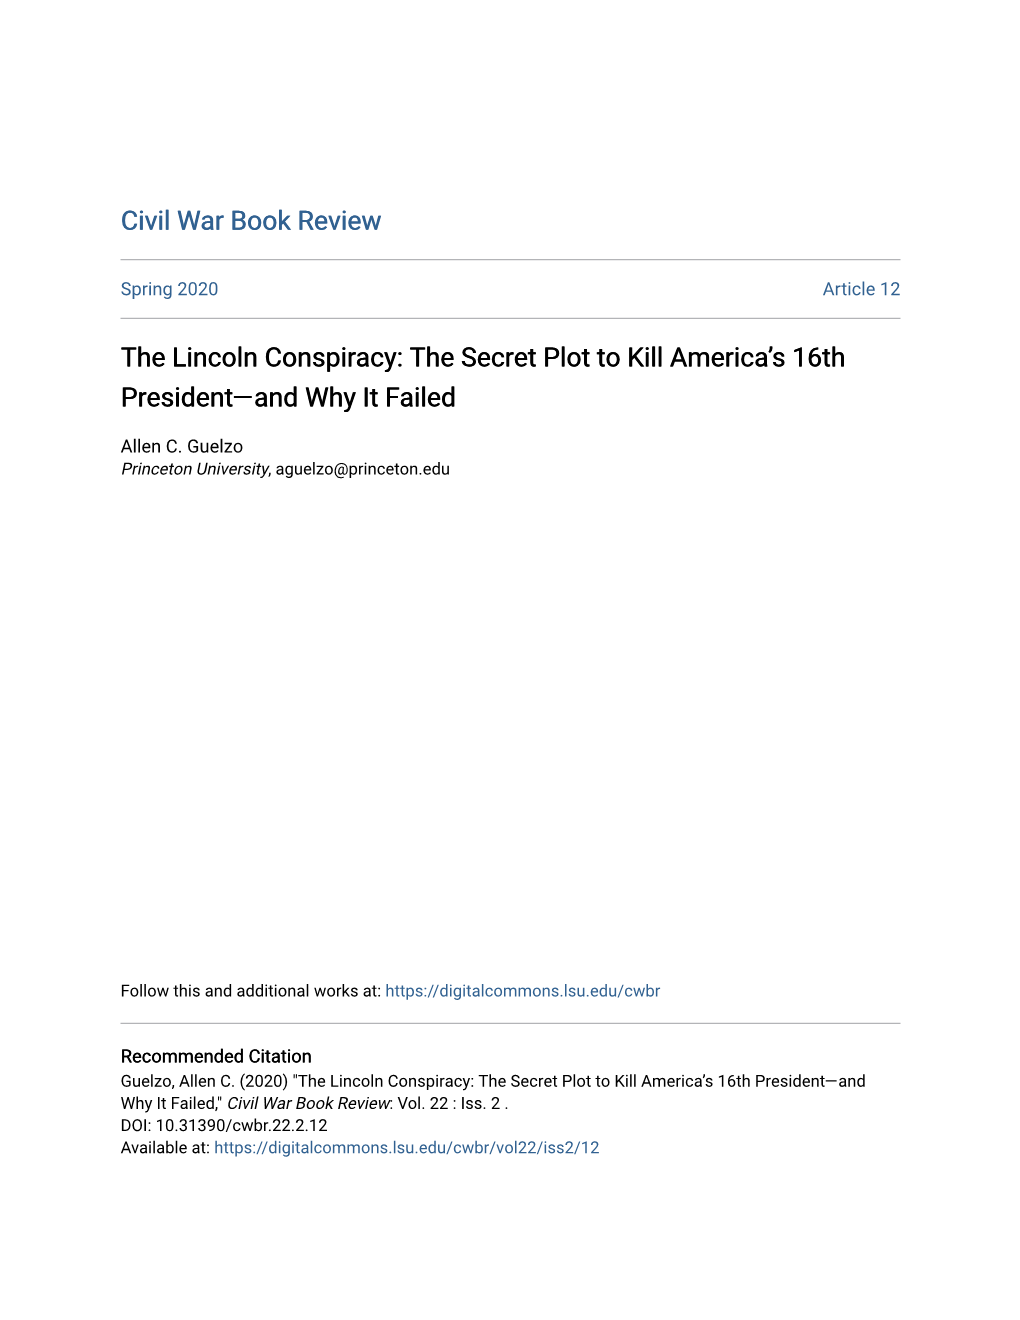 The Lincoln Conspiracy: the Secret Plot to Kill America's 16Th President